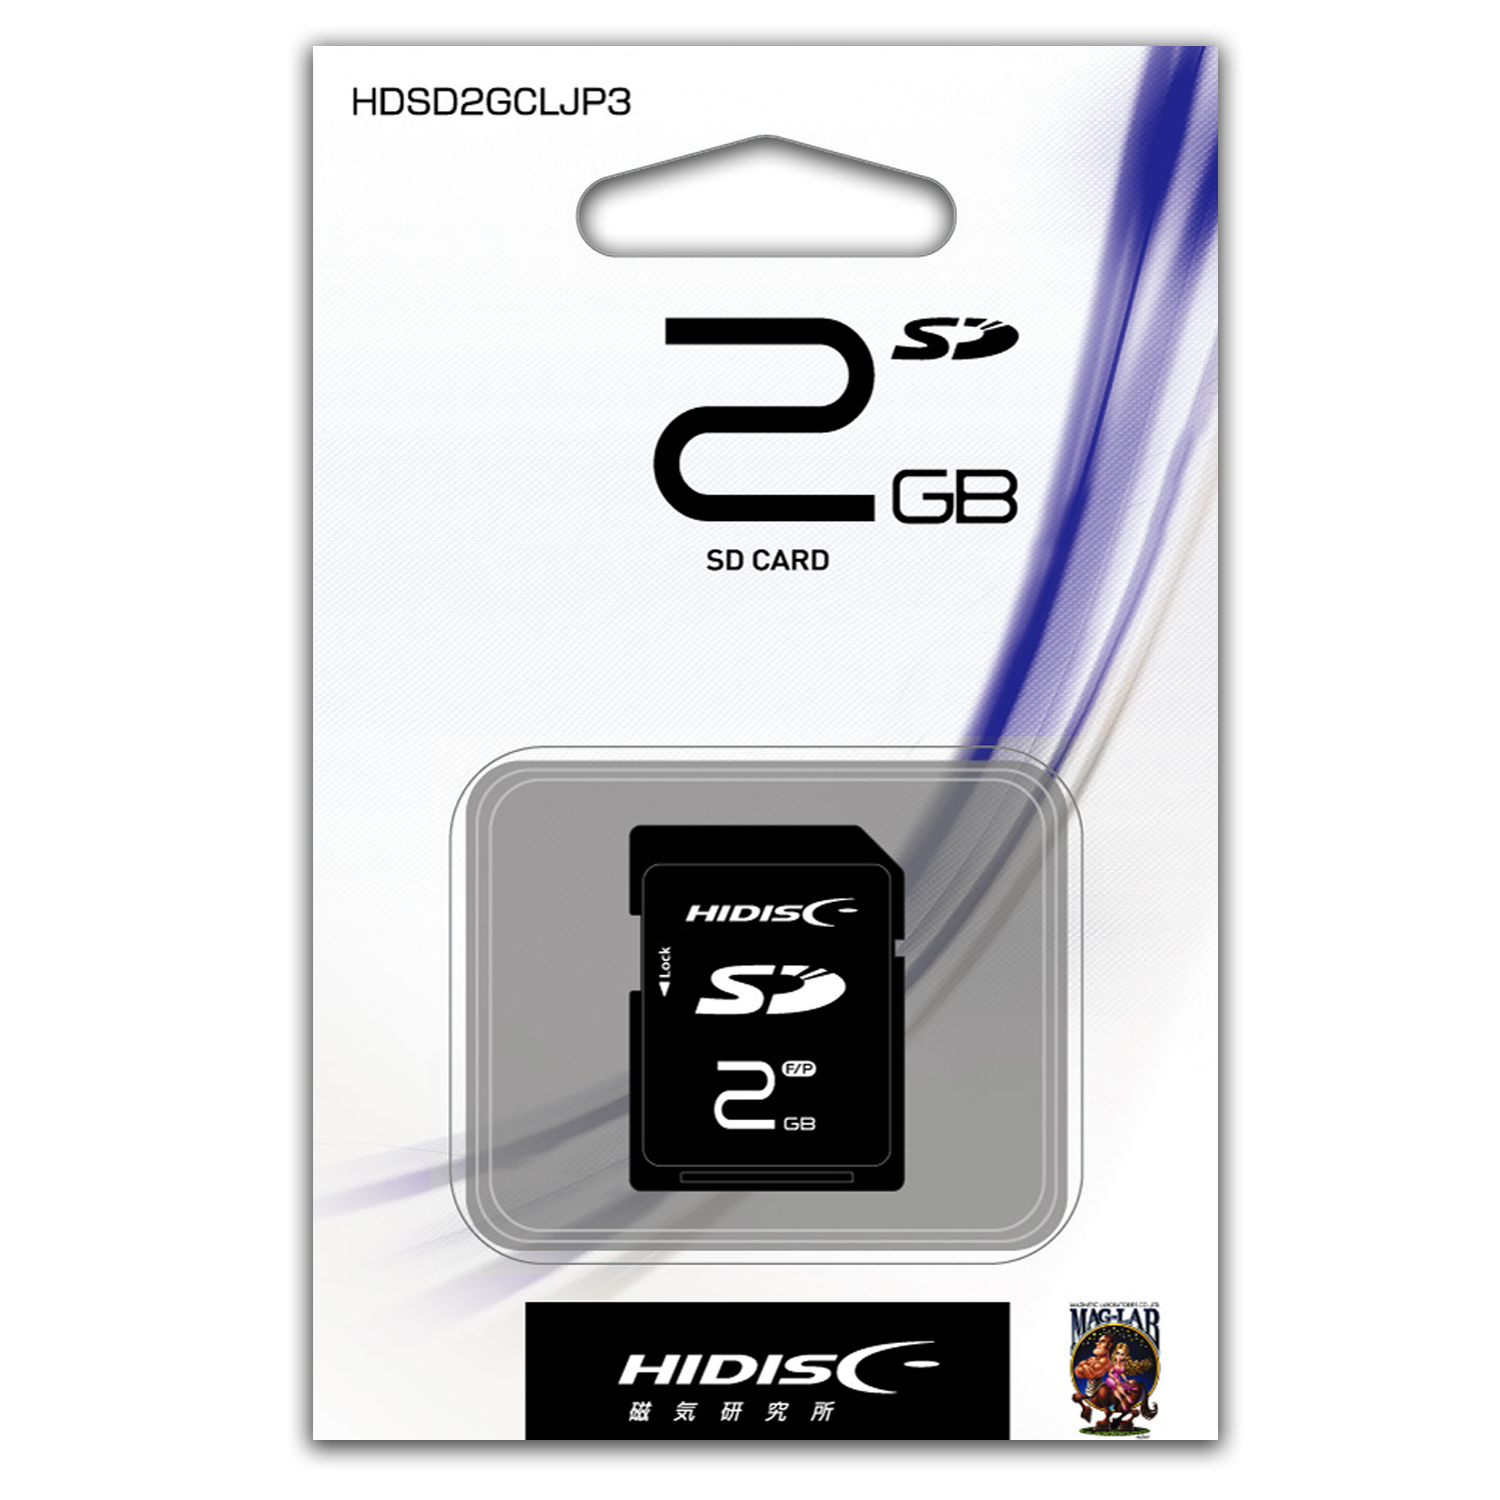 HIDISC SDカード 2GB Speedｙ HDSD2GCLJP3